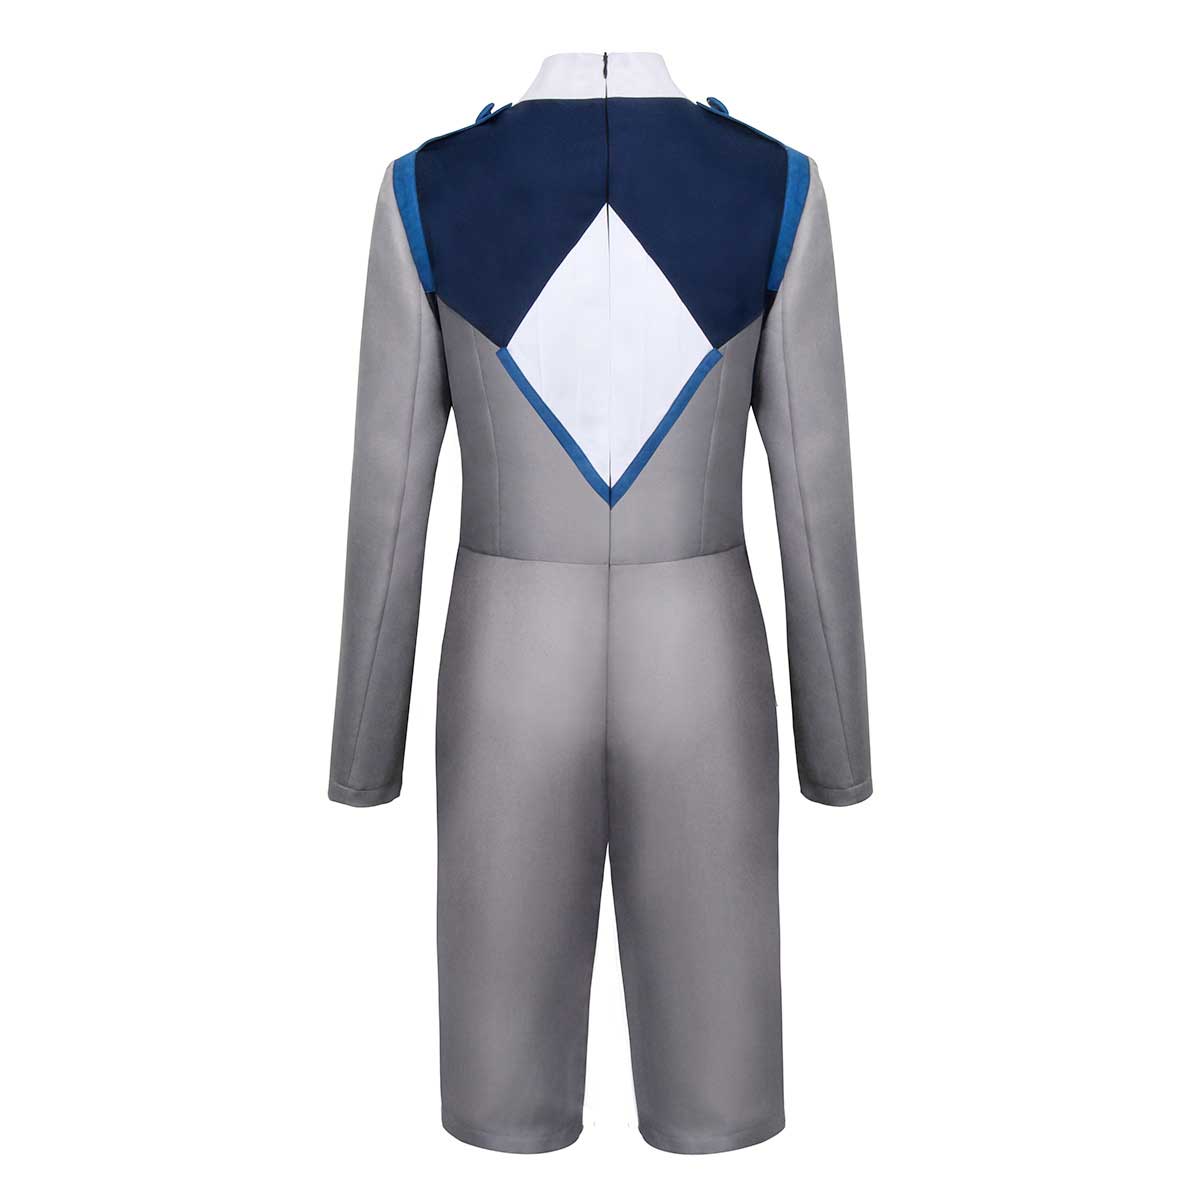 DARLING in the FRANXX Hiro Code : 016 Uniform Cosplay Costume